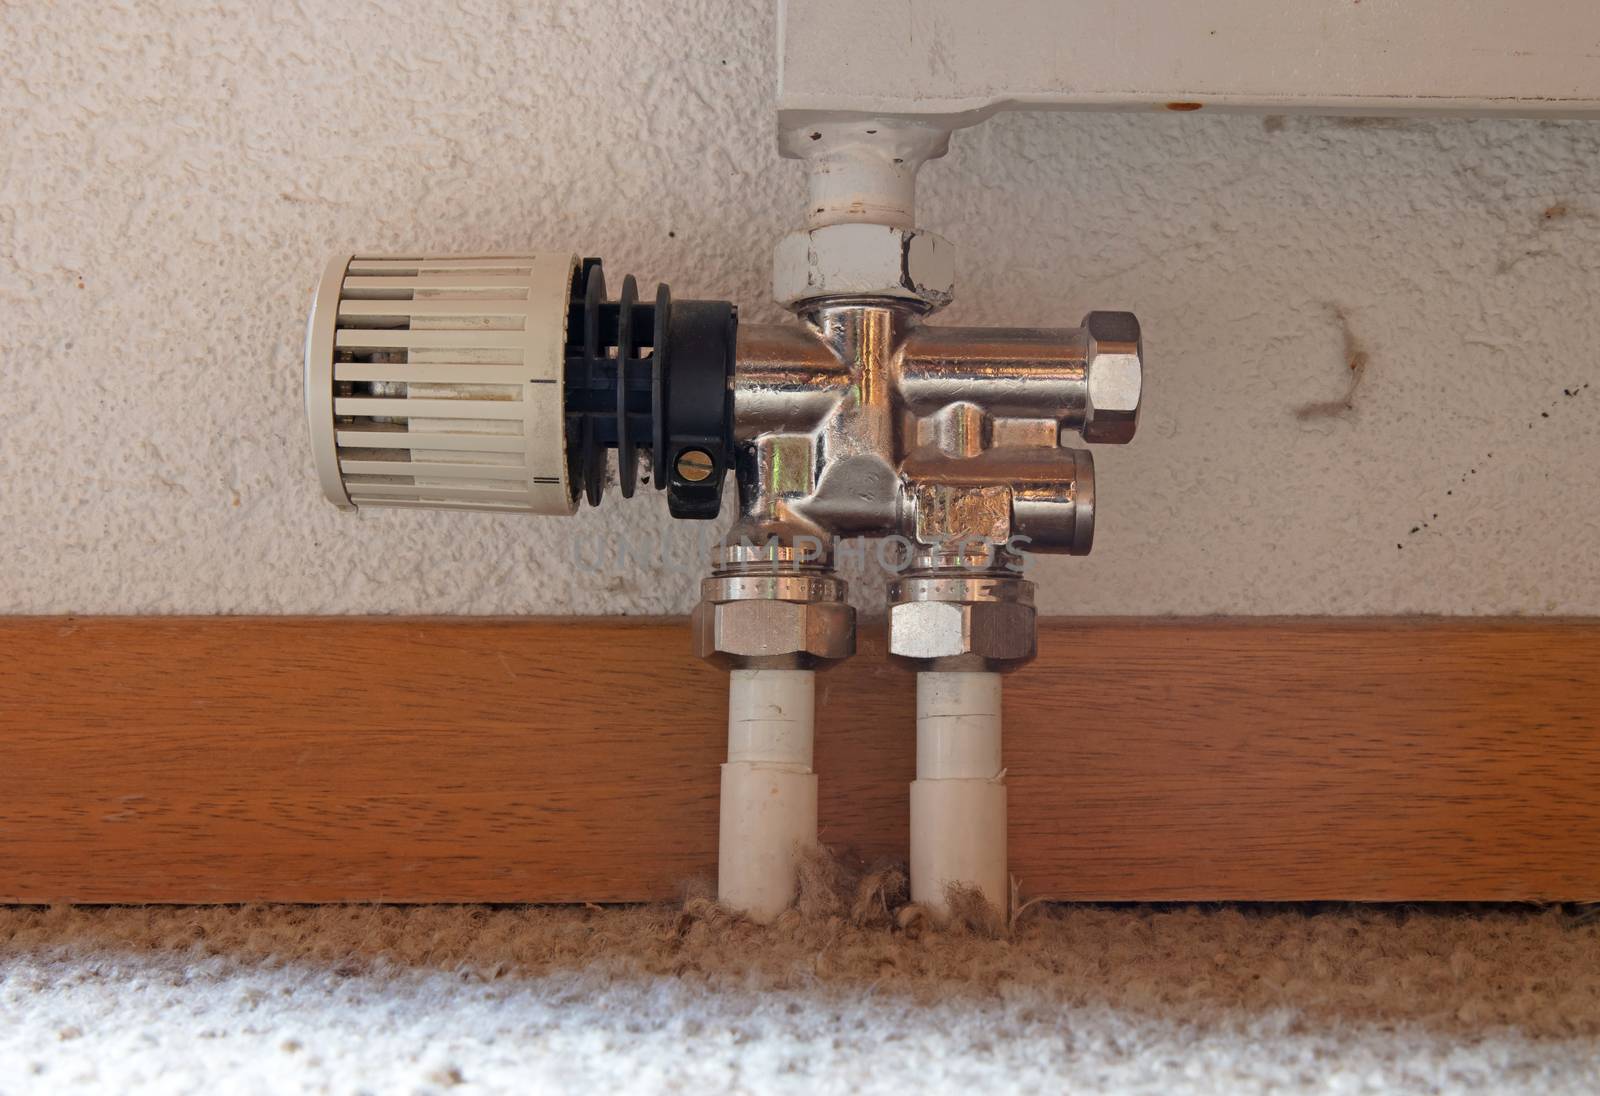 Heating radiator detail with adjusting knob by michaklootwijk